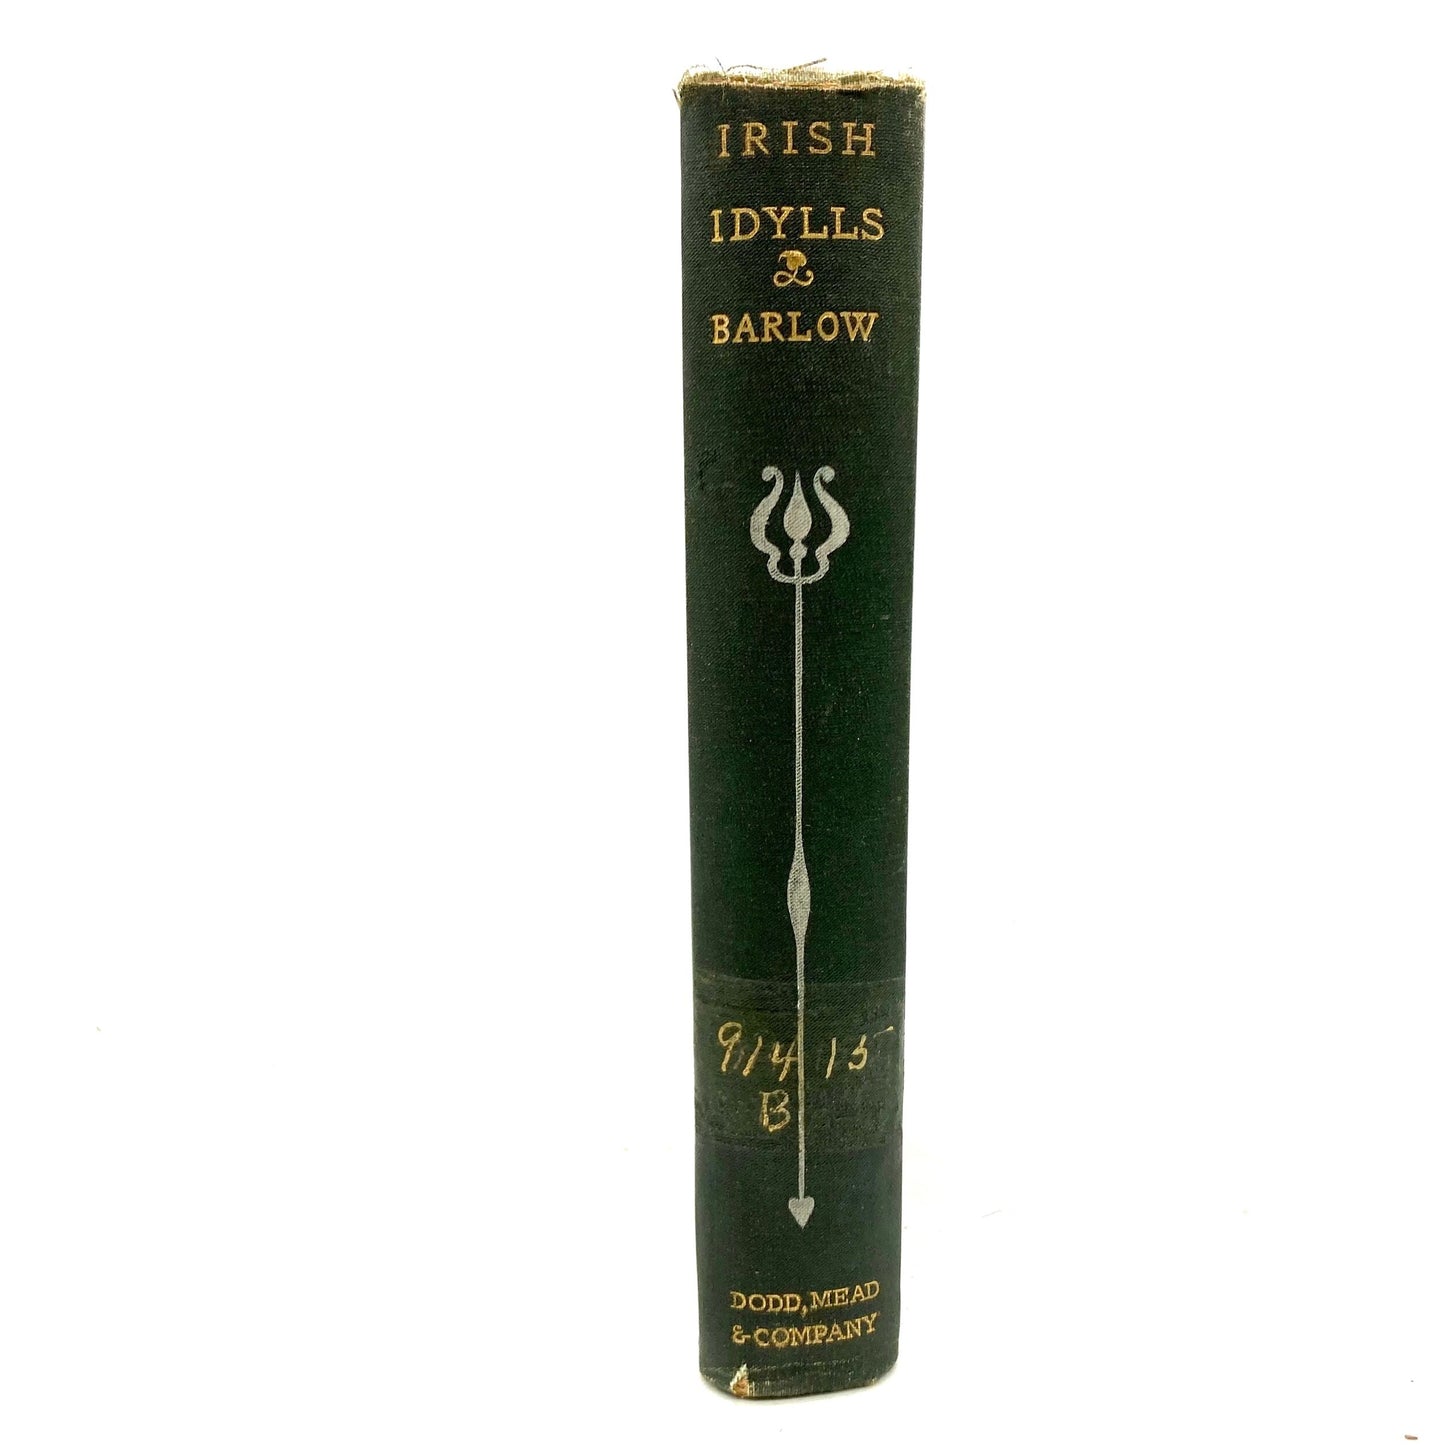 BARLOW, Jane "Irish Idylls" [Dodd, Mead & Co, 1898] - Buzz Bookstore